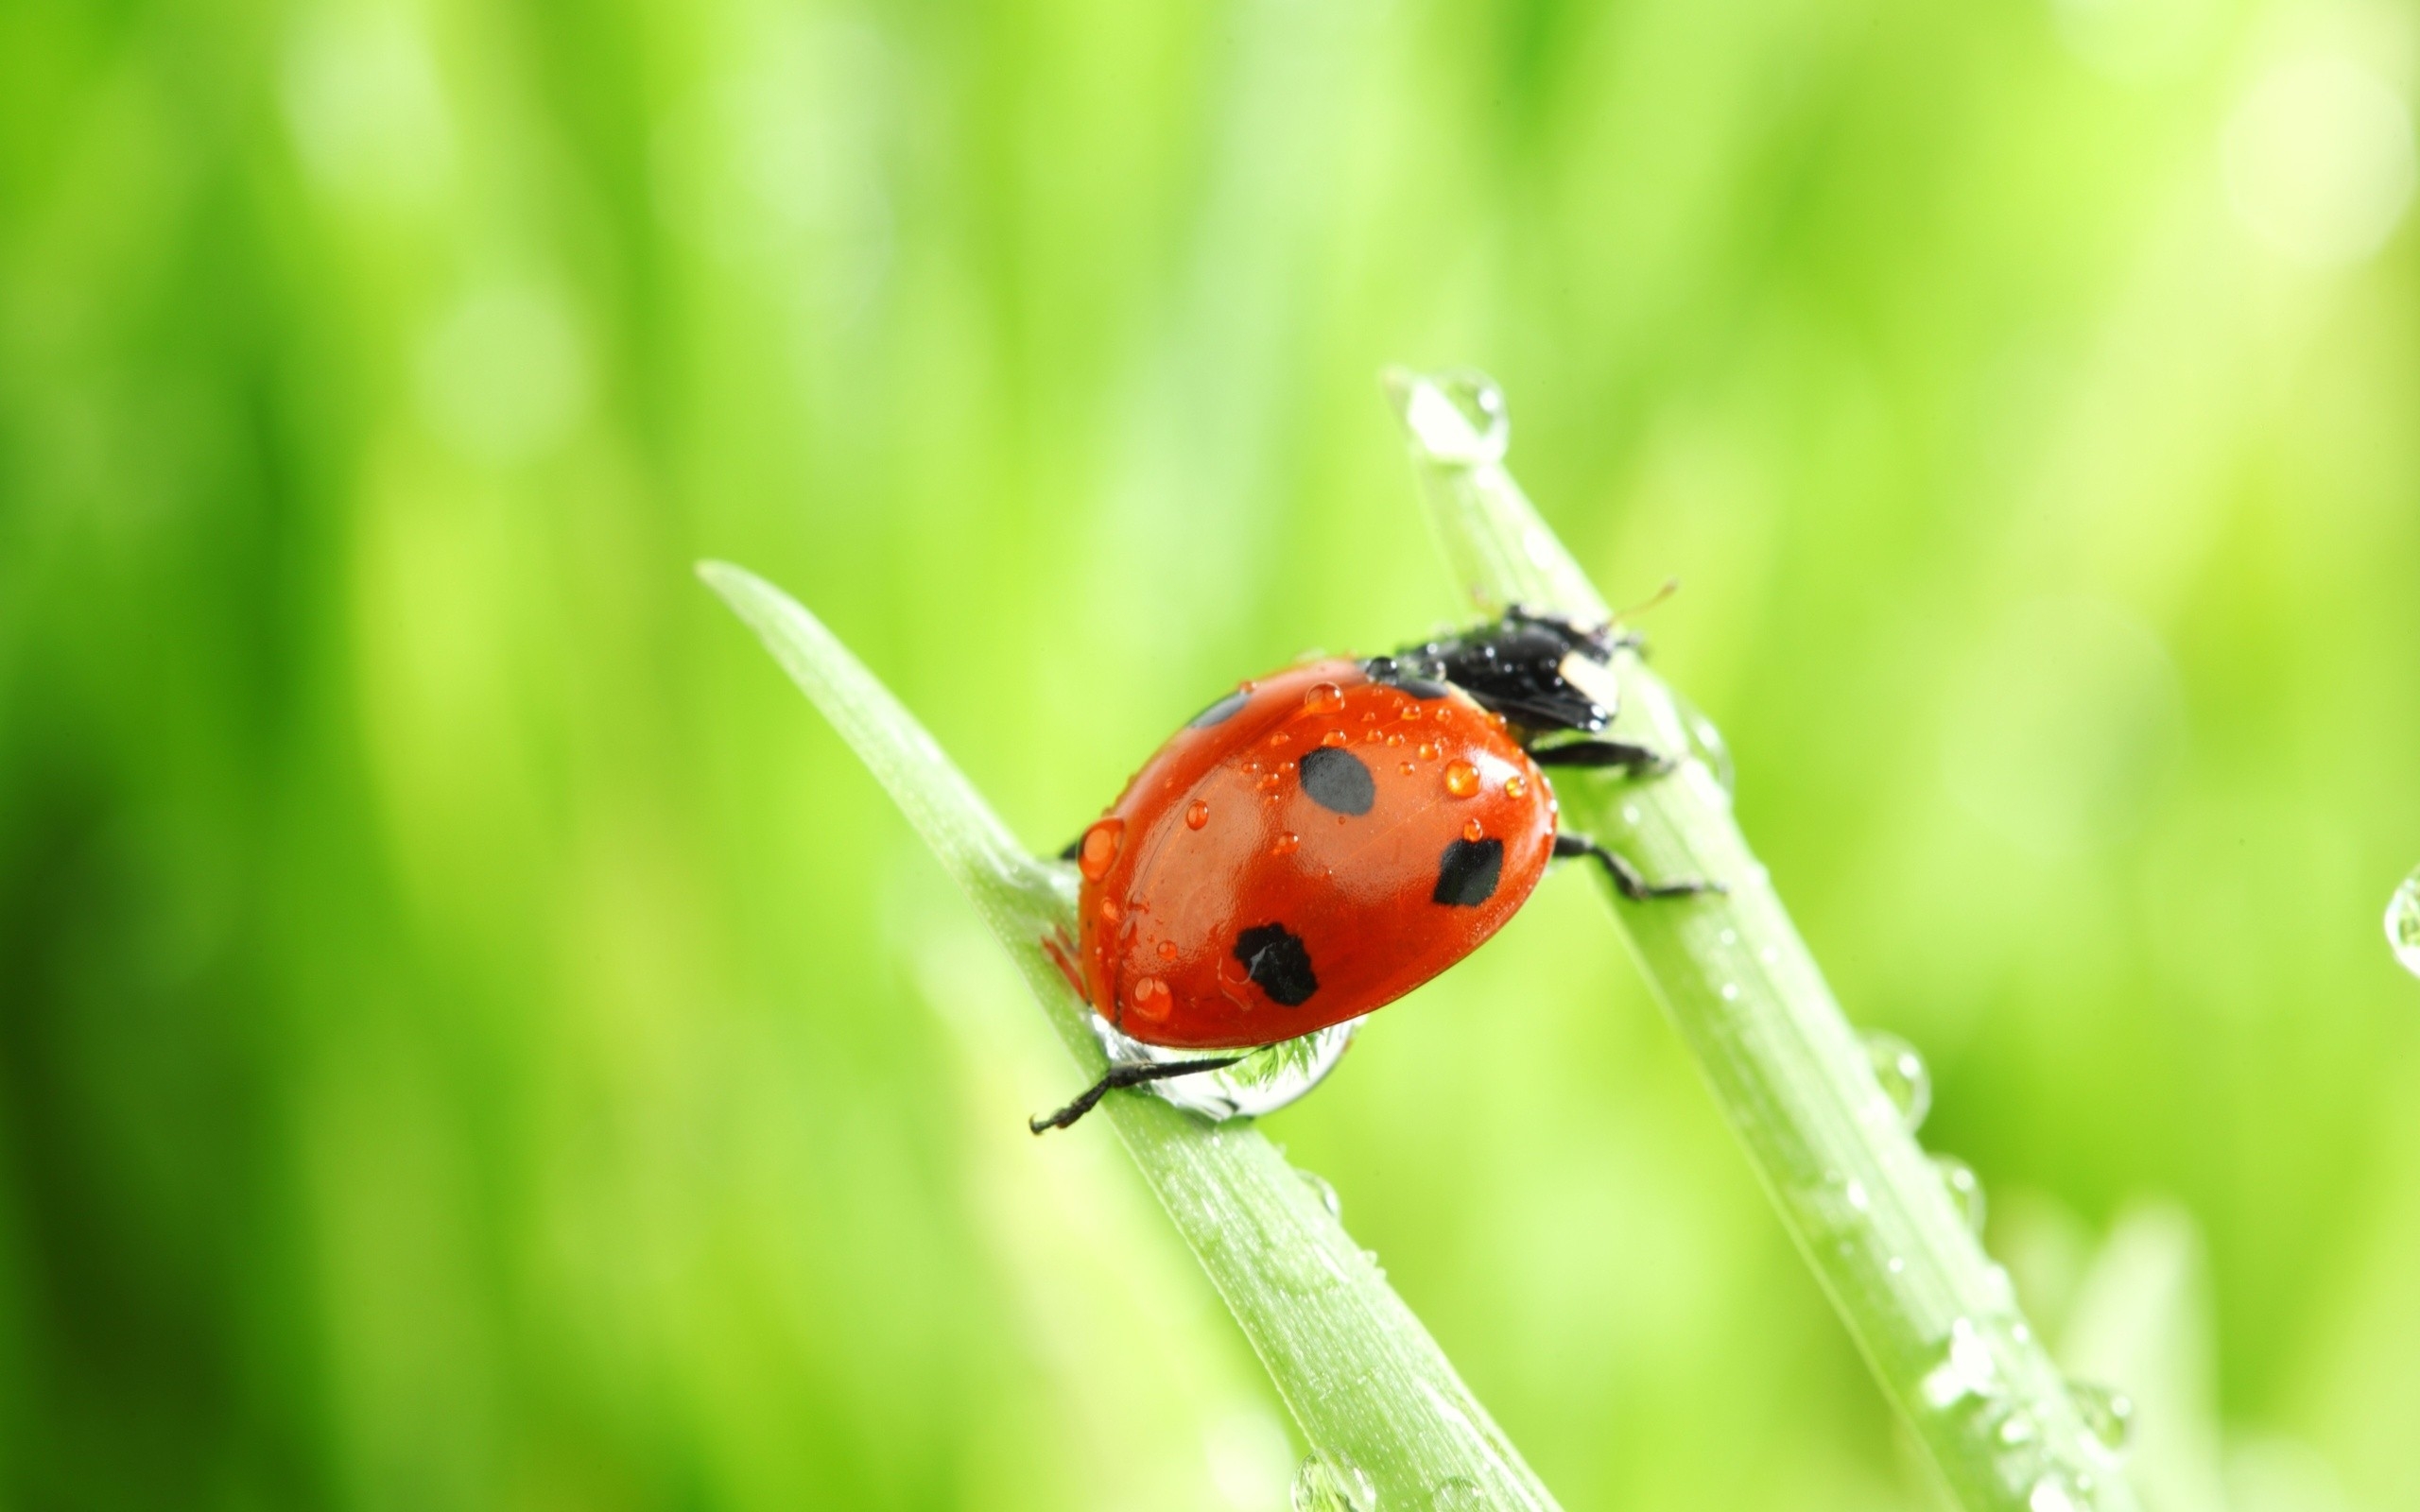 A wet ladybug